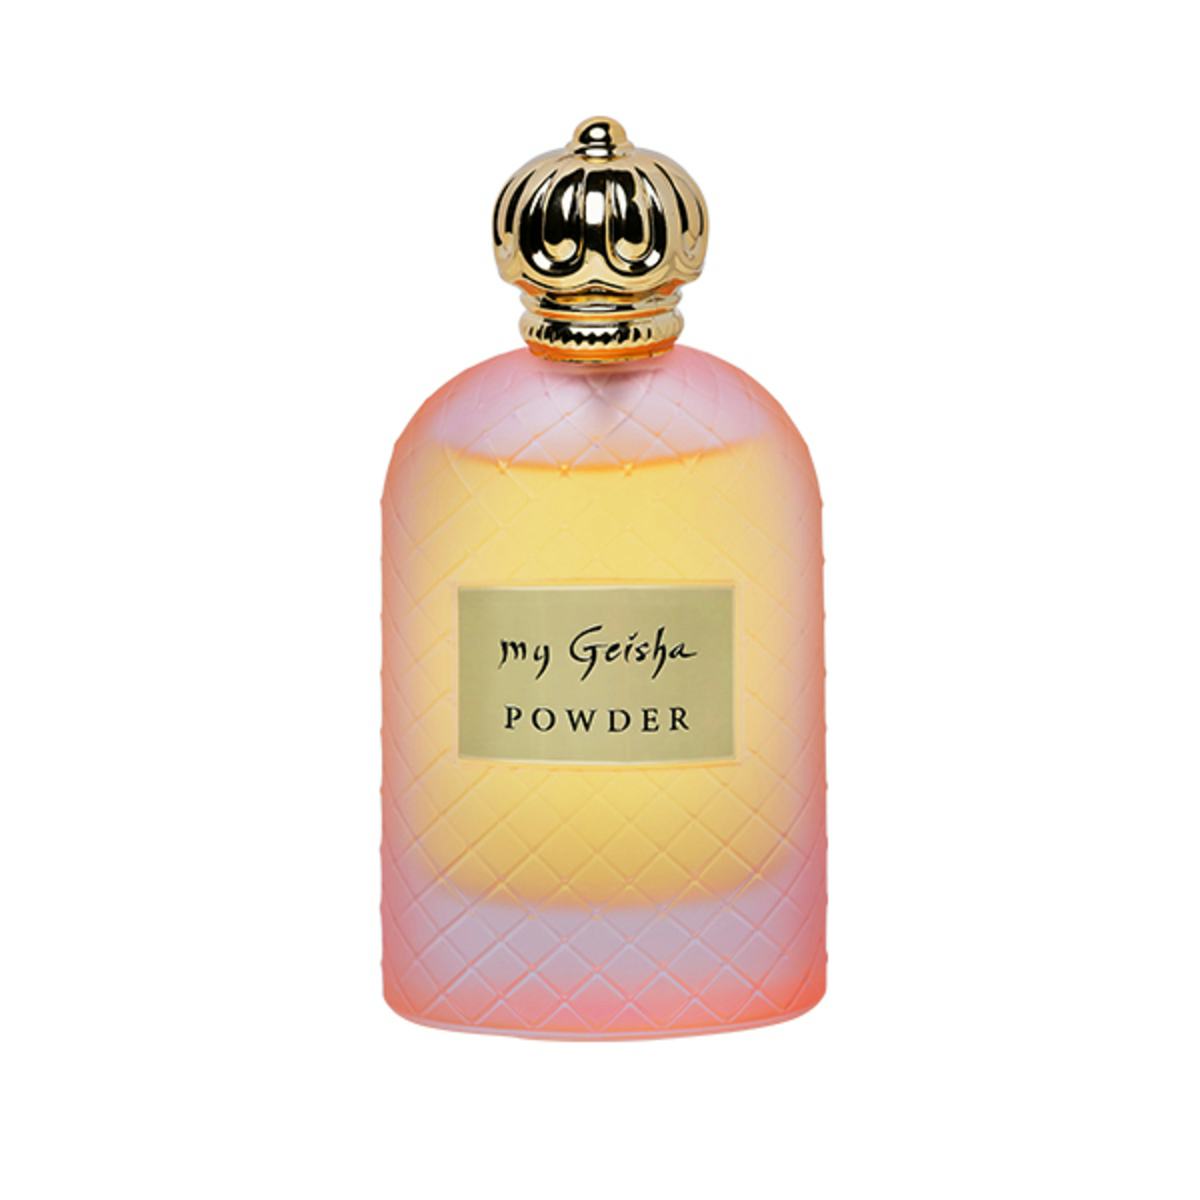 Extrait de parfum "Powder" 100 ml, artisanal product for direct sale in Switzerland